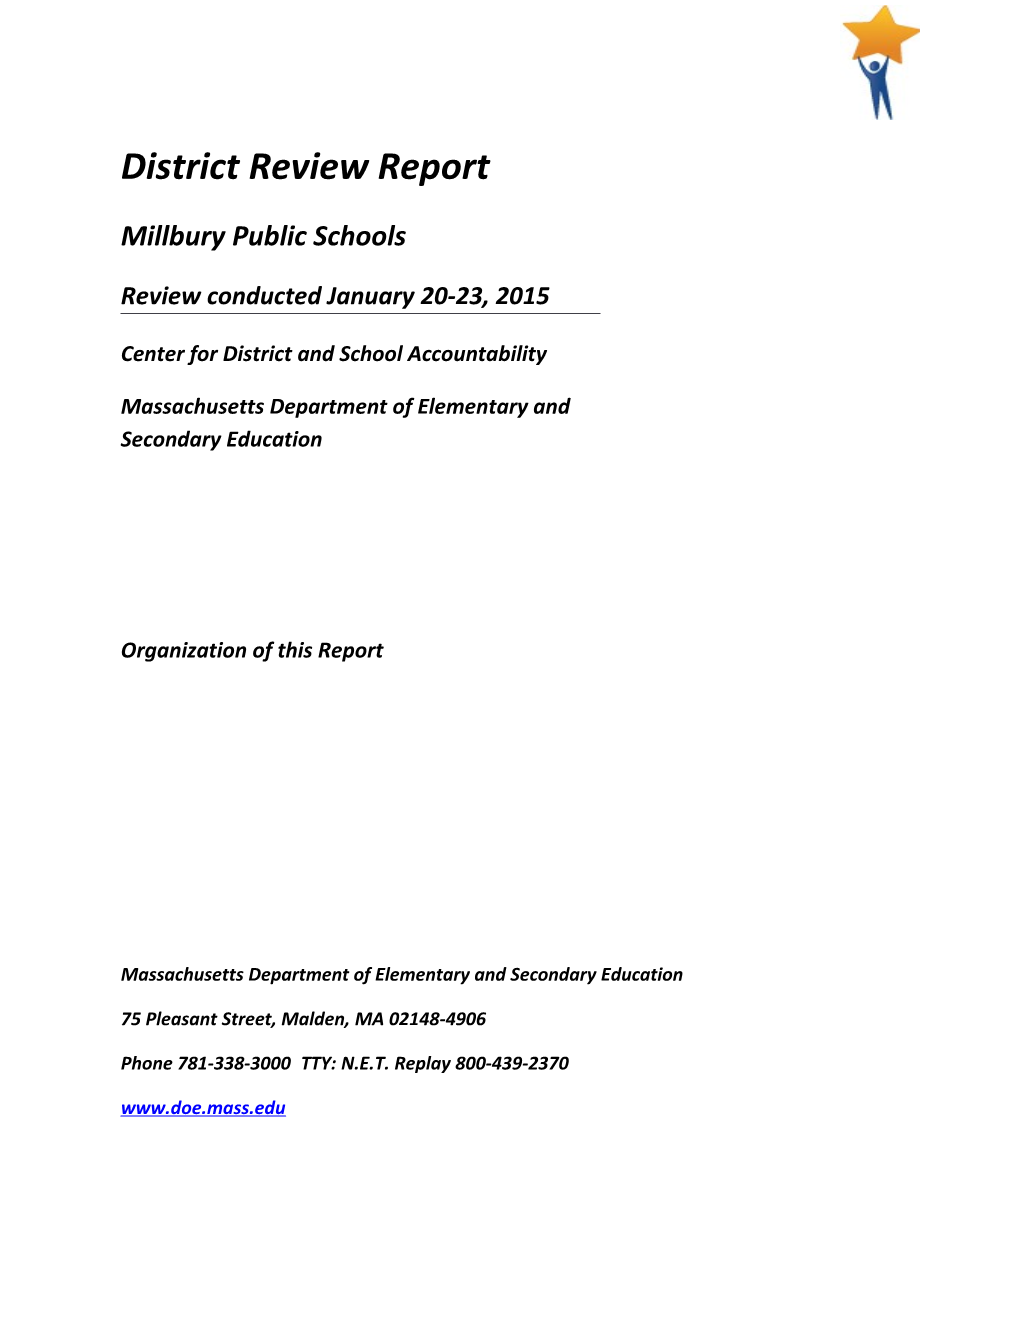 Millbury District Review Report, 2015